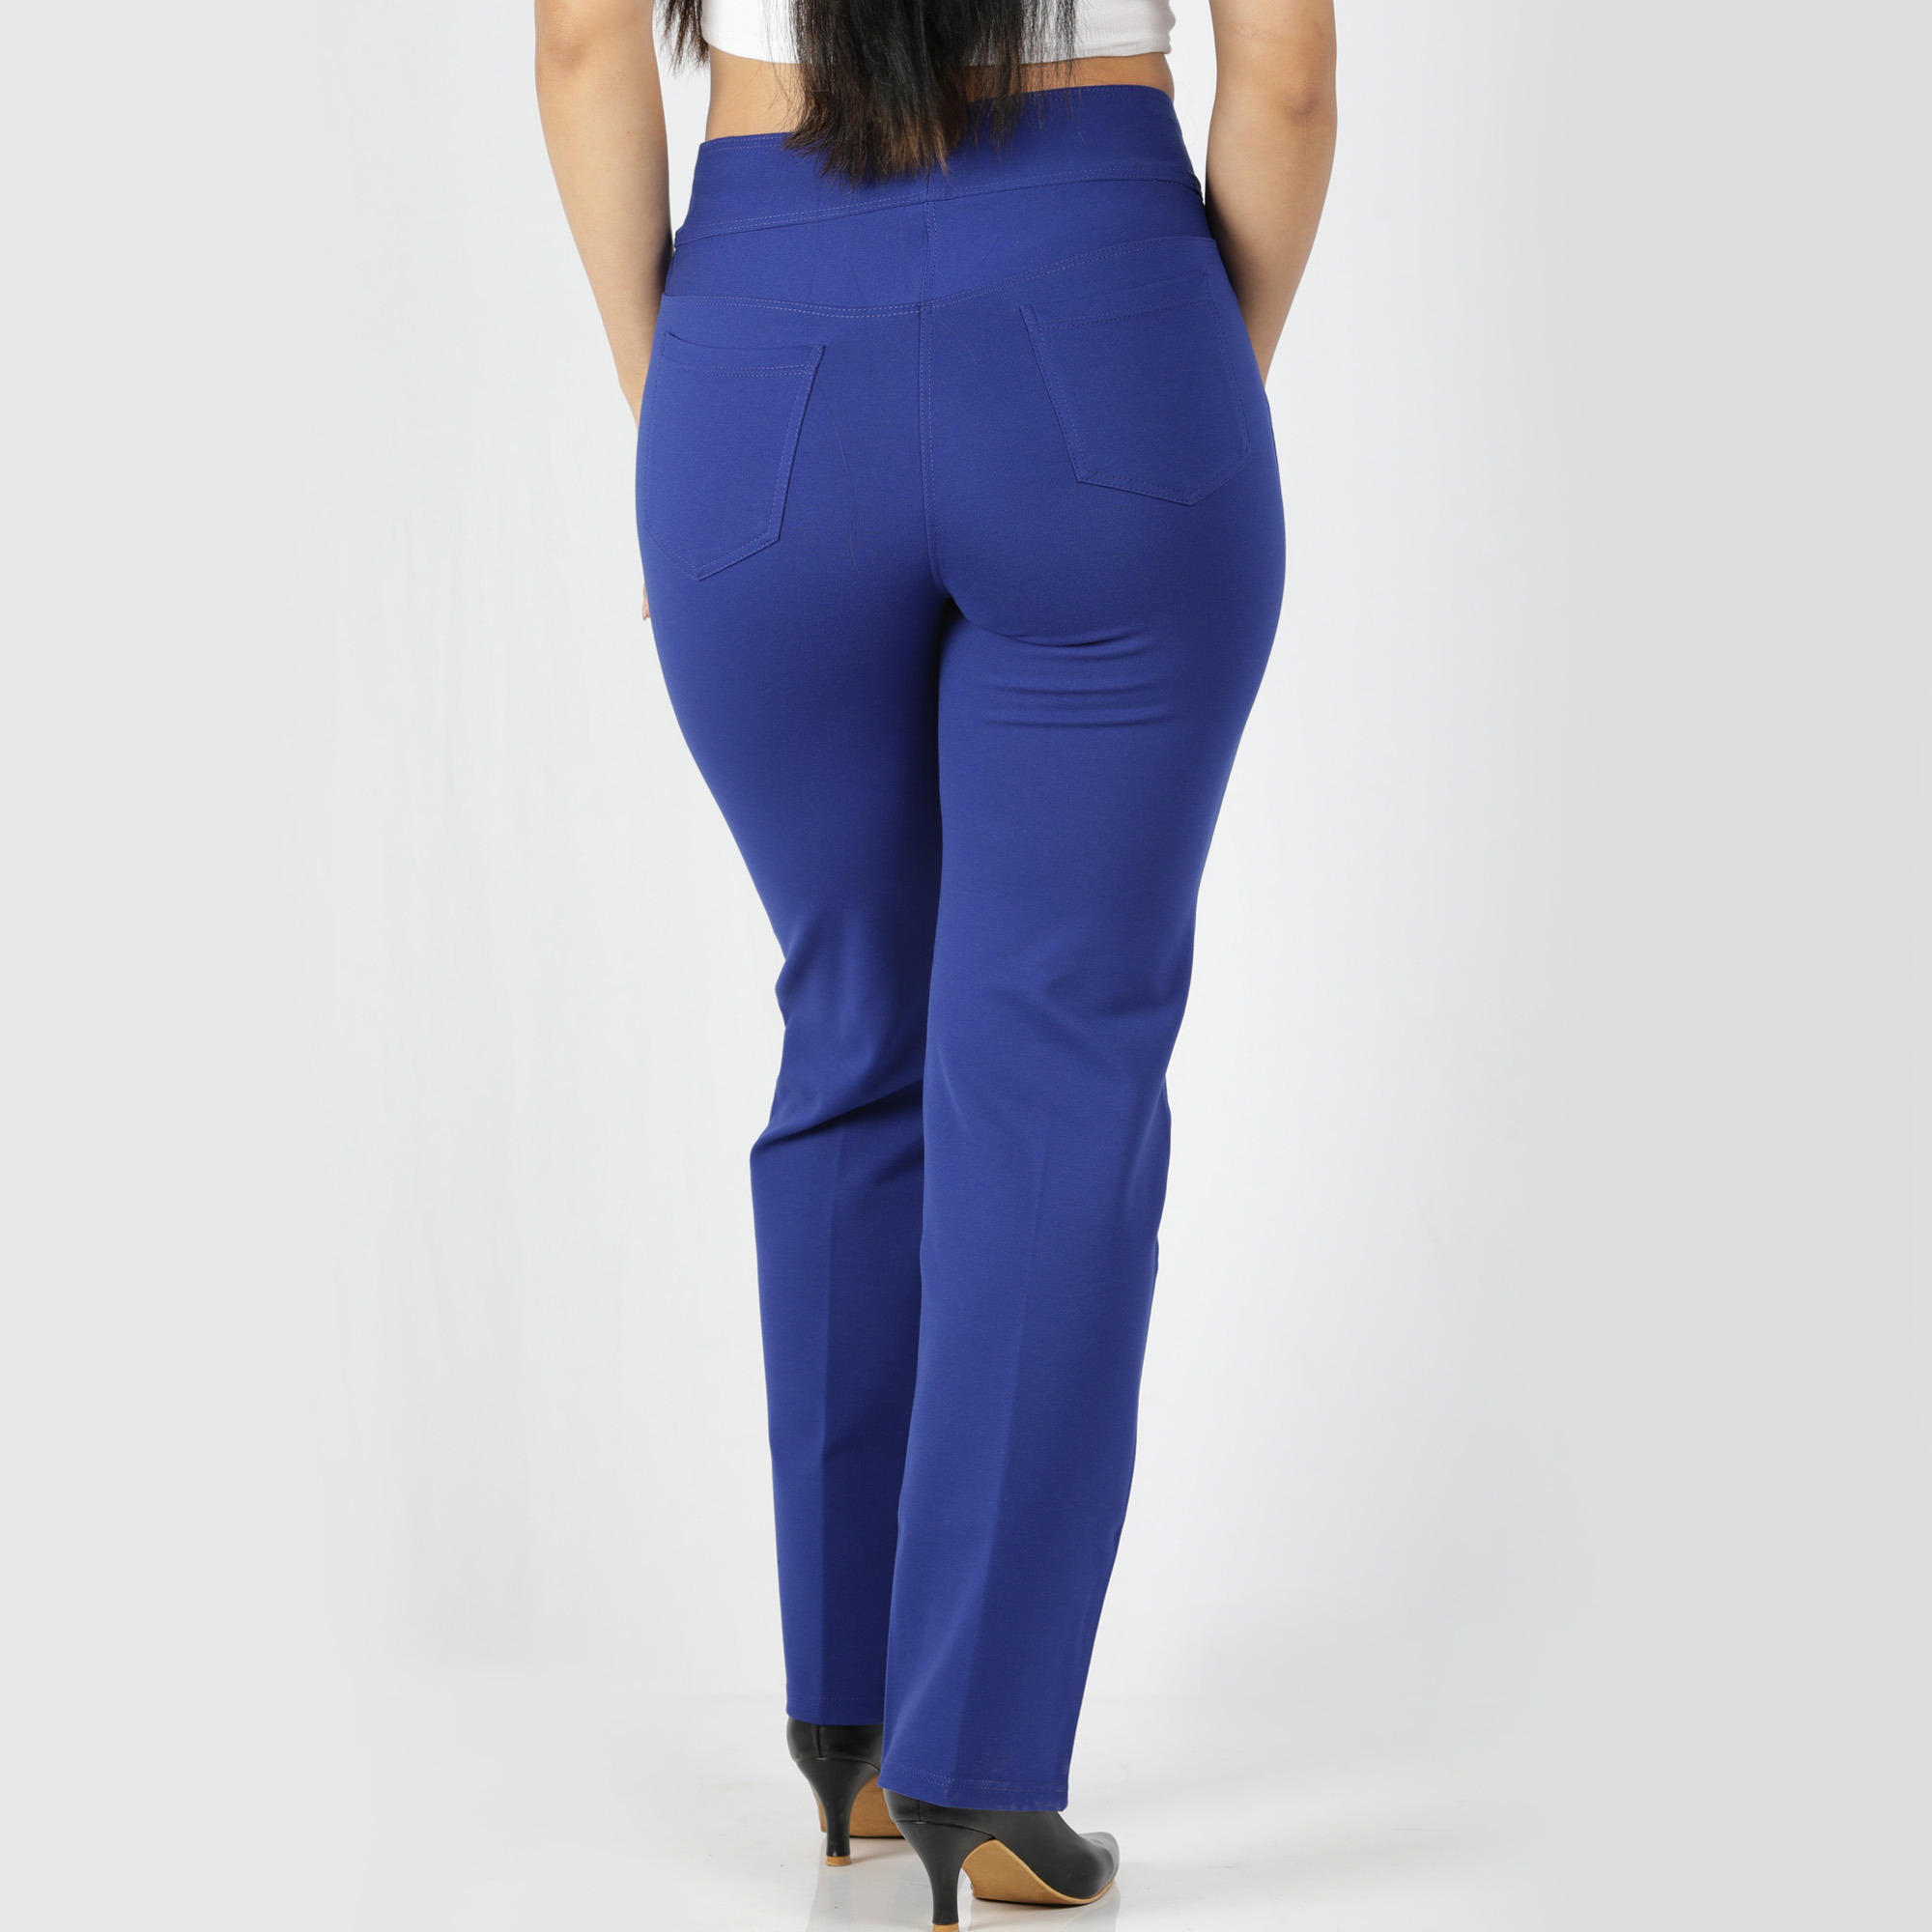 AMYDUS Plus Size Women Crease Seam Tummy Shaper Pants | High-Waist |  Stretchable | Straight